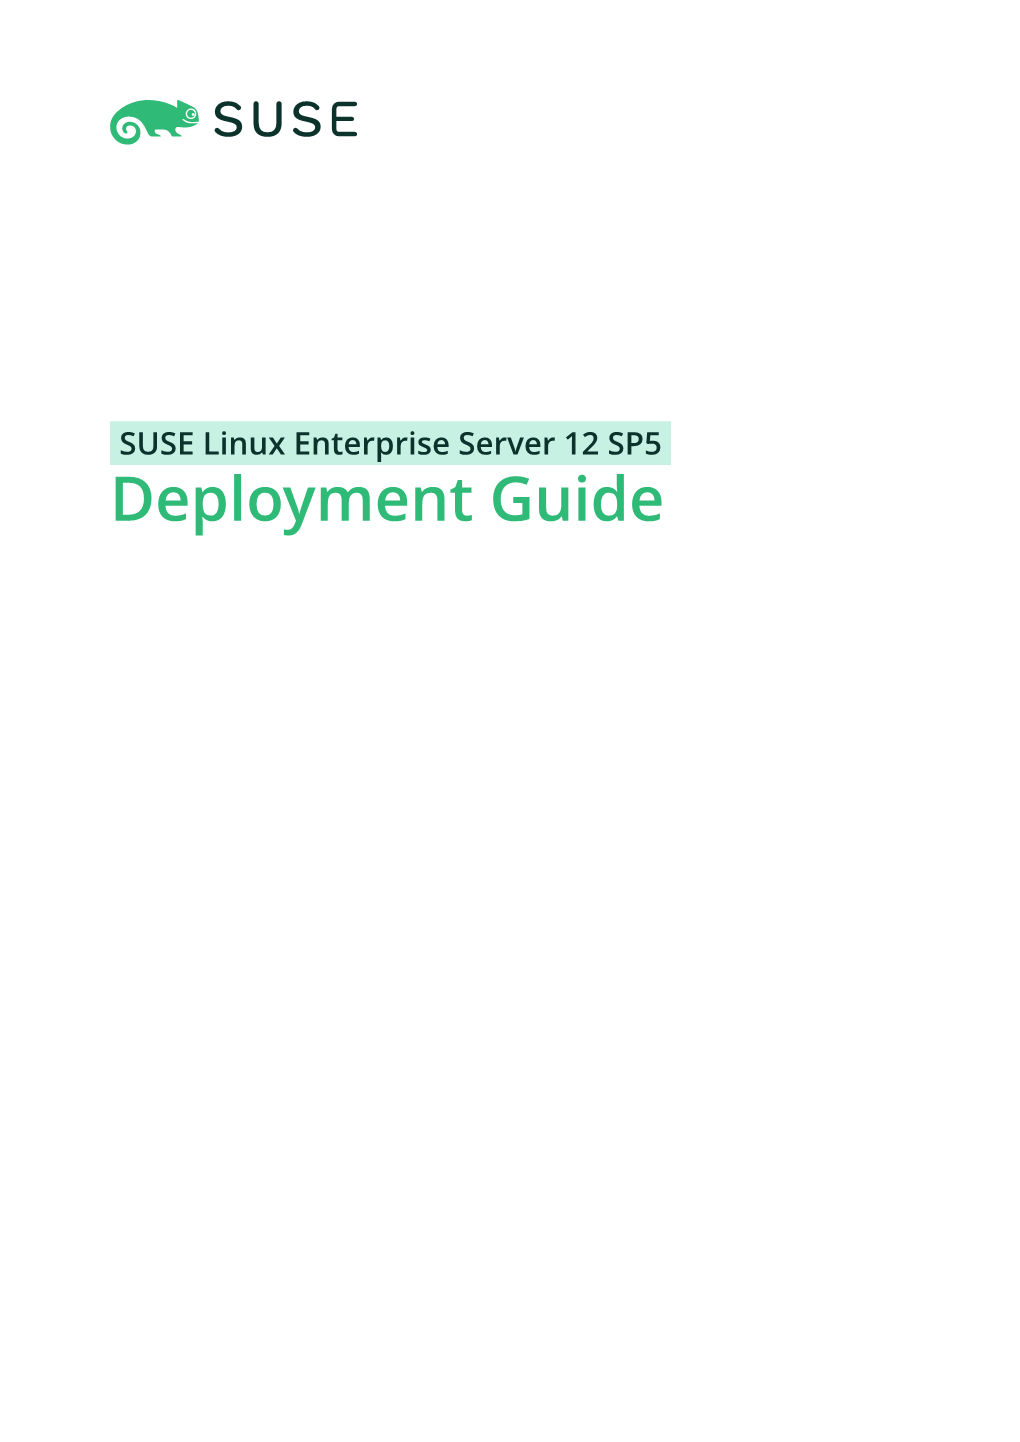 Deployment Guide Deployment Guide SUSE Linux Enterprise Server 12 SP5